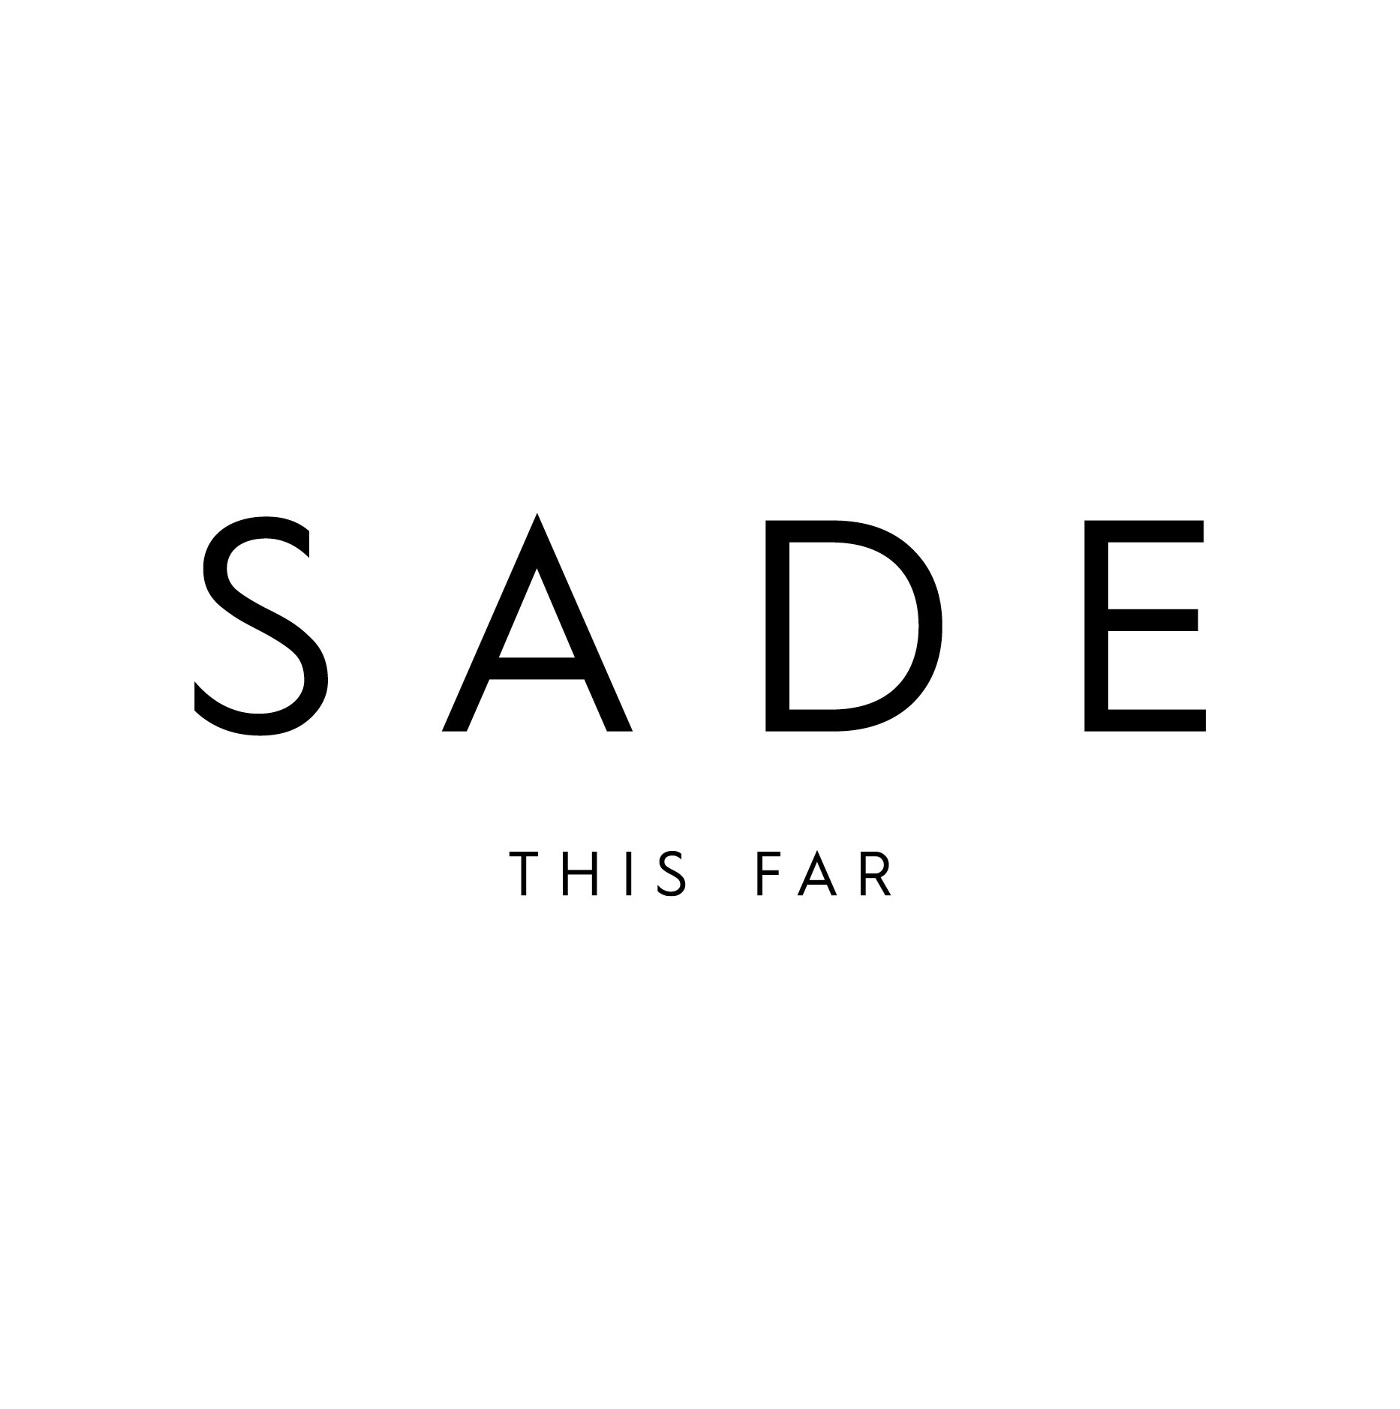 Far box. Sade this far. 0889854561215, Виниловая пластинка Sade, this far. Sade Box Set. Sade Vinyl.